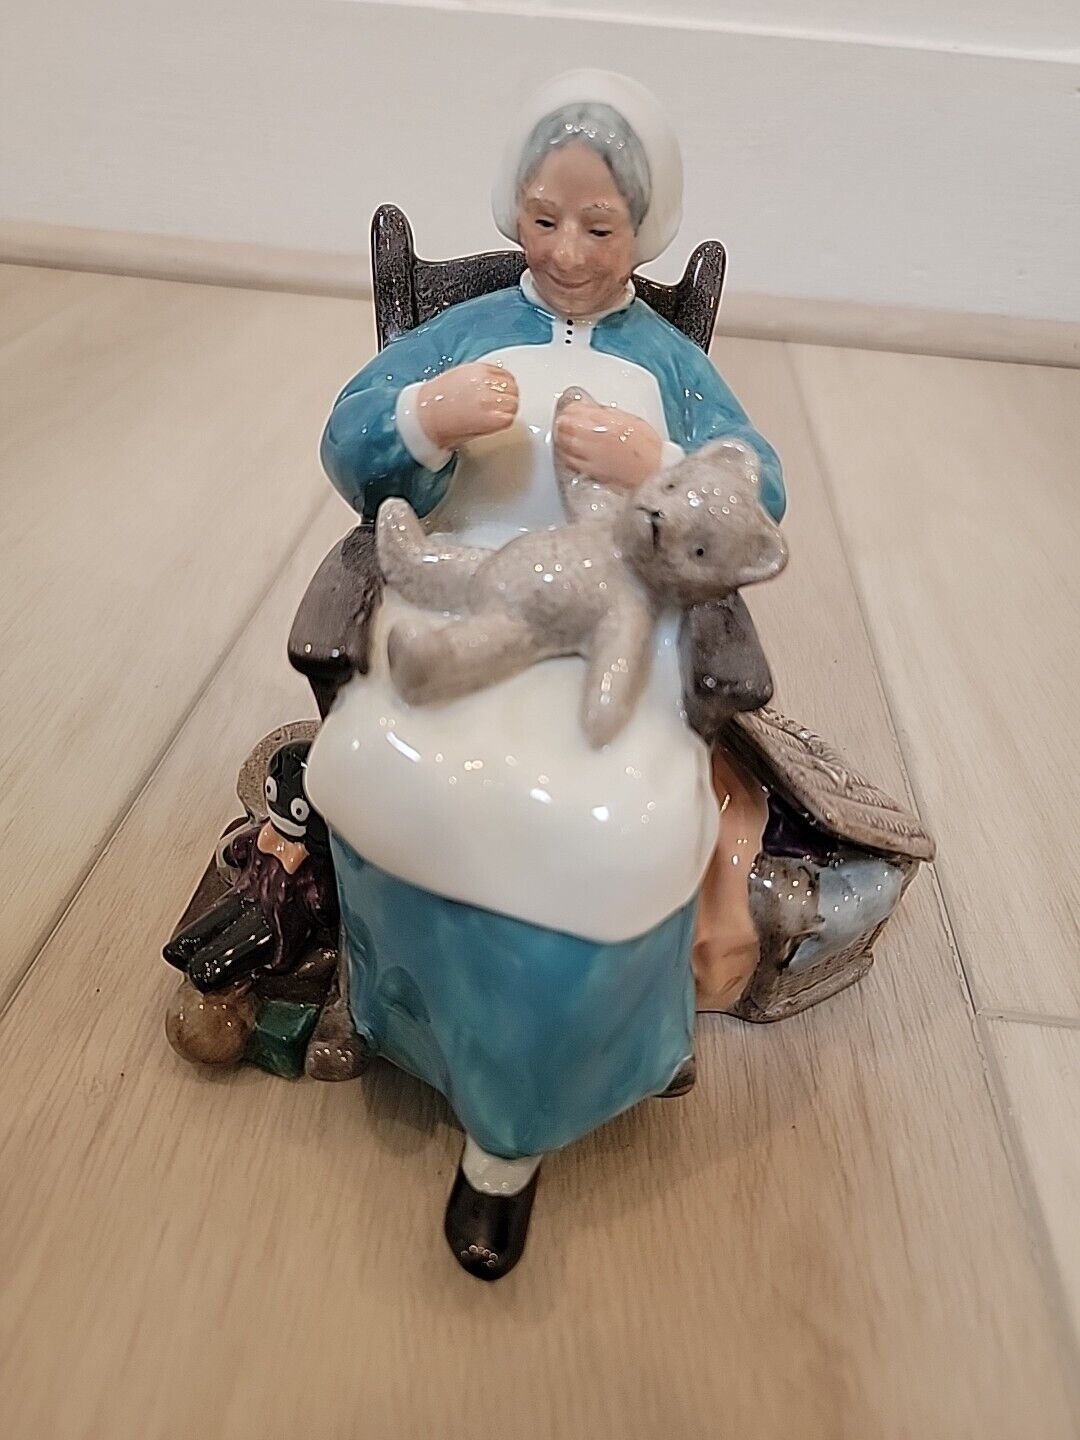 Mid Century Royal Doulton Porcelain Figurine, “Nanny”, HN2221, 1957, 6.5” High